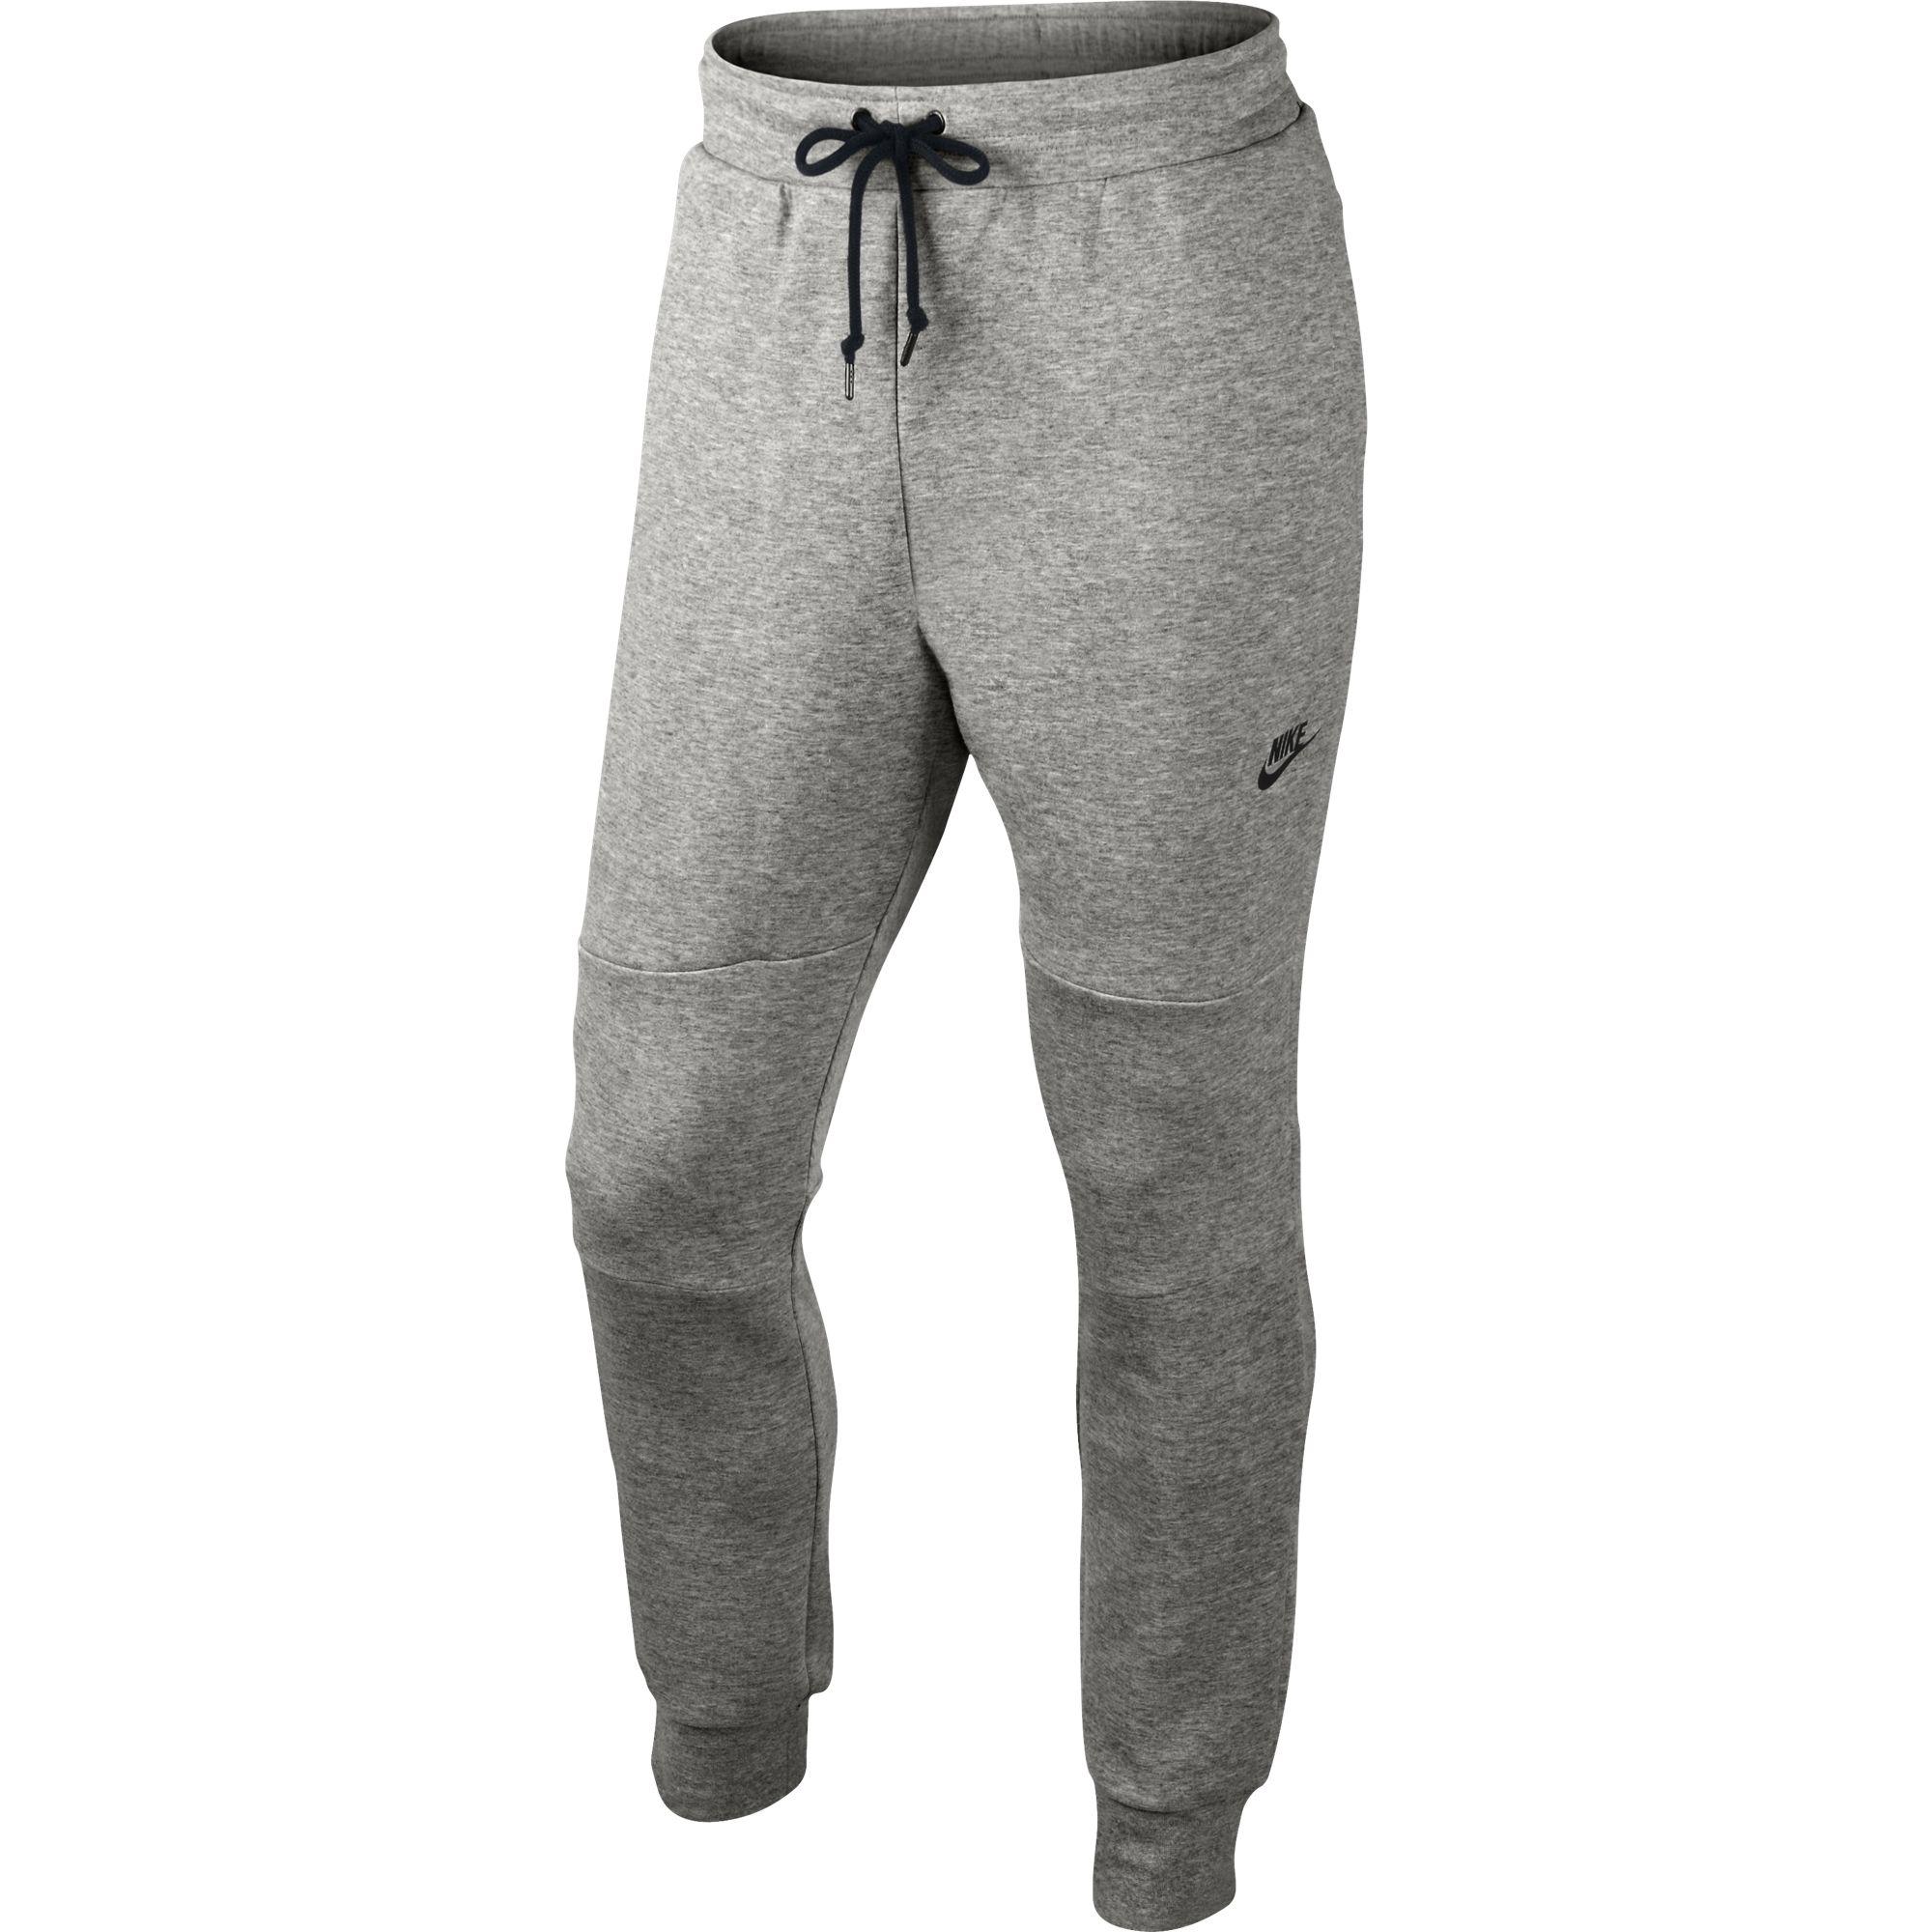 Nike Mens Tech Fleece Pants - Dark Grey Heather/Black - Tennisnuts.com